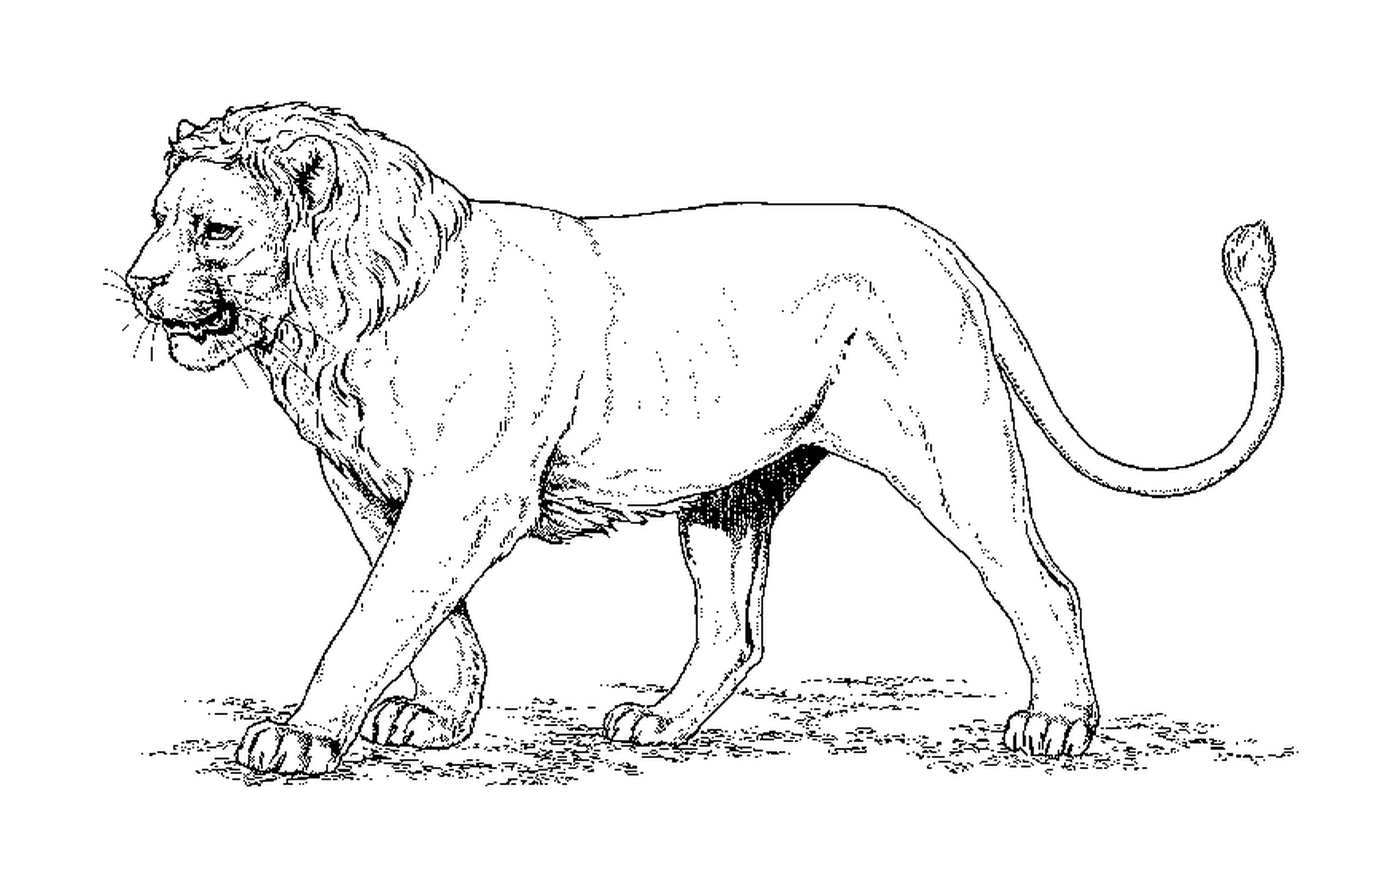  León de África occidental 